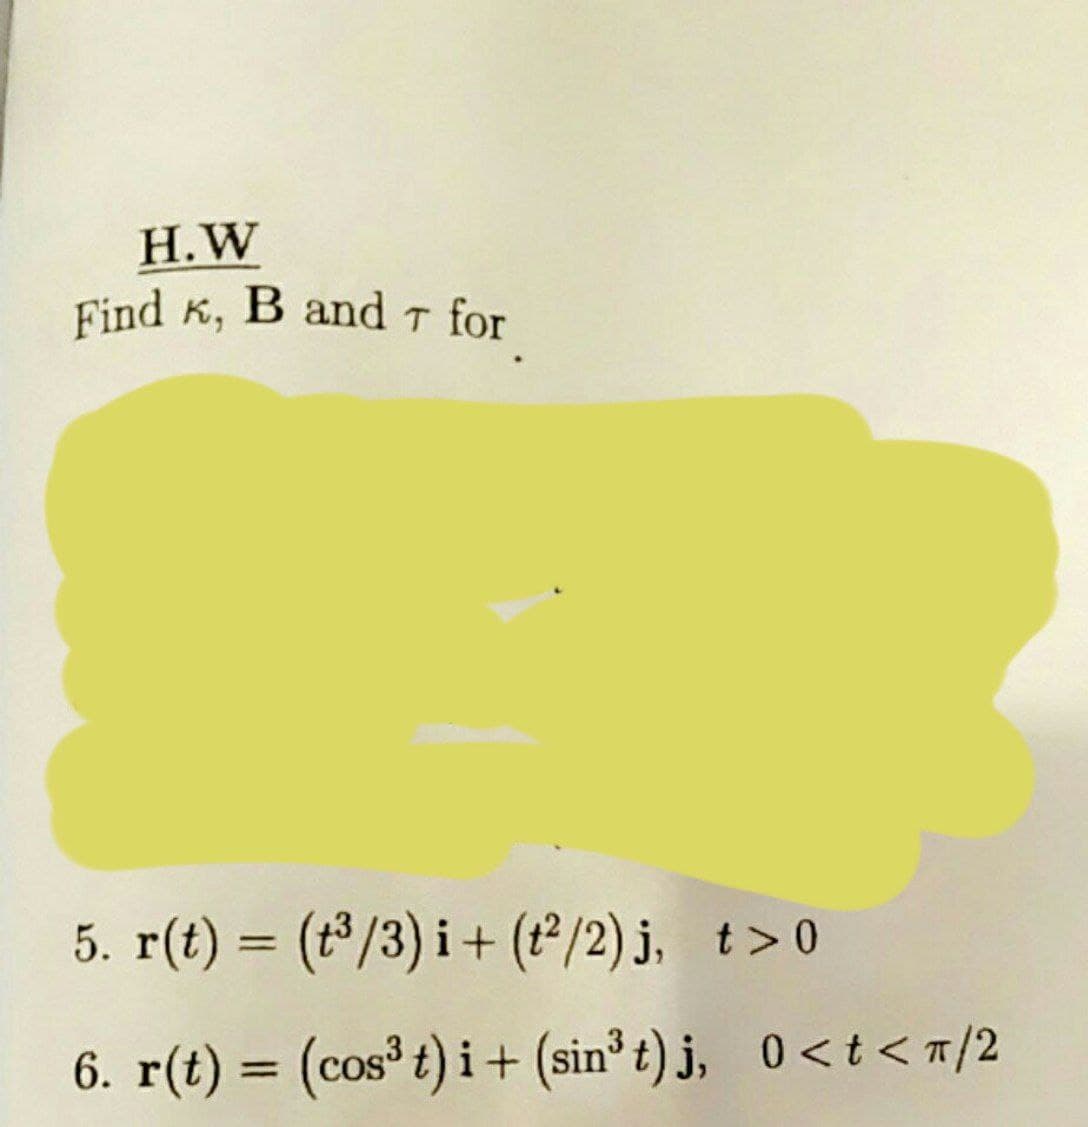 Find K, B and T for
H.W
5. r(t) = (t³/3) i+ (12/2) j, t>0
%3D
6. r(t) = (cos³ t) i + (sin³t) j, 0<t < 7/2
%3D
